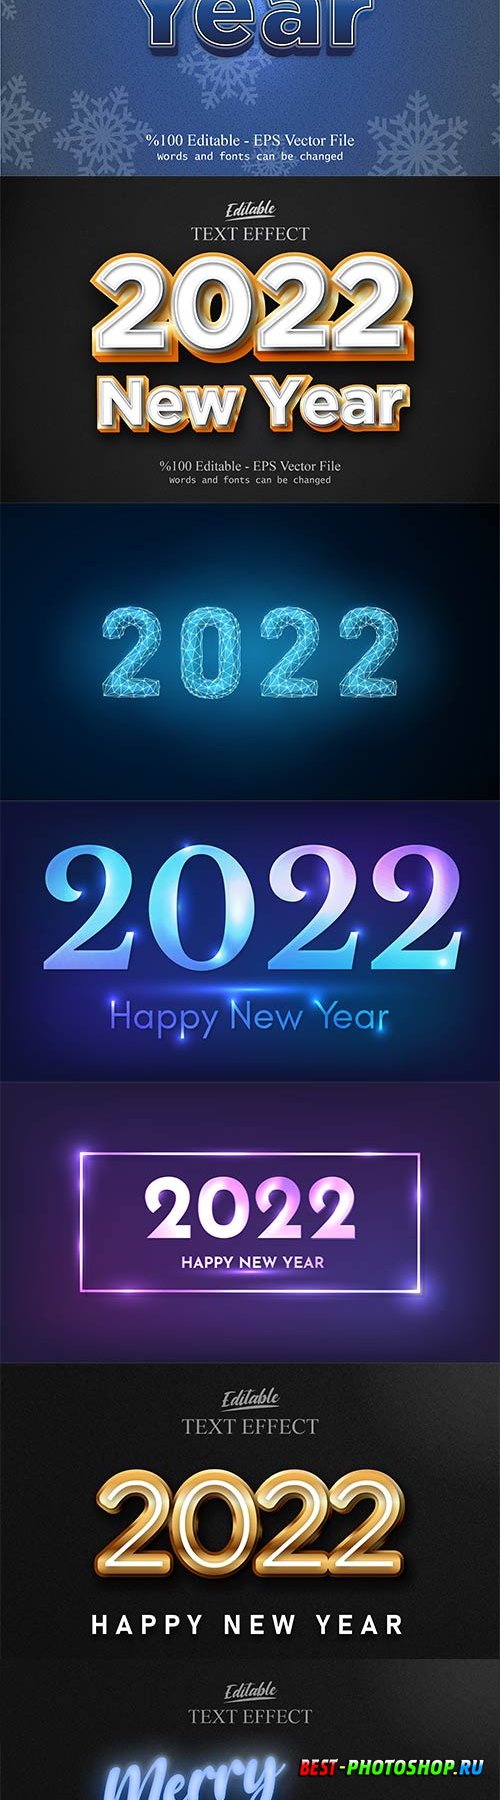 2022 New year, Merry christmas editable text effect premium vector vol 7